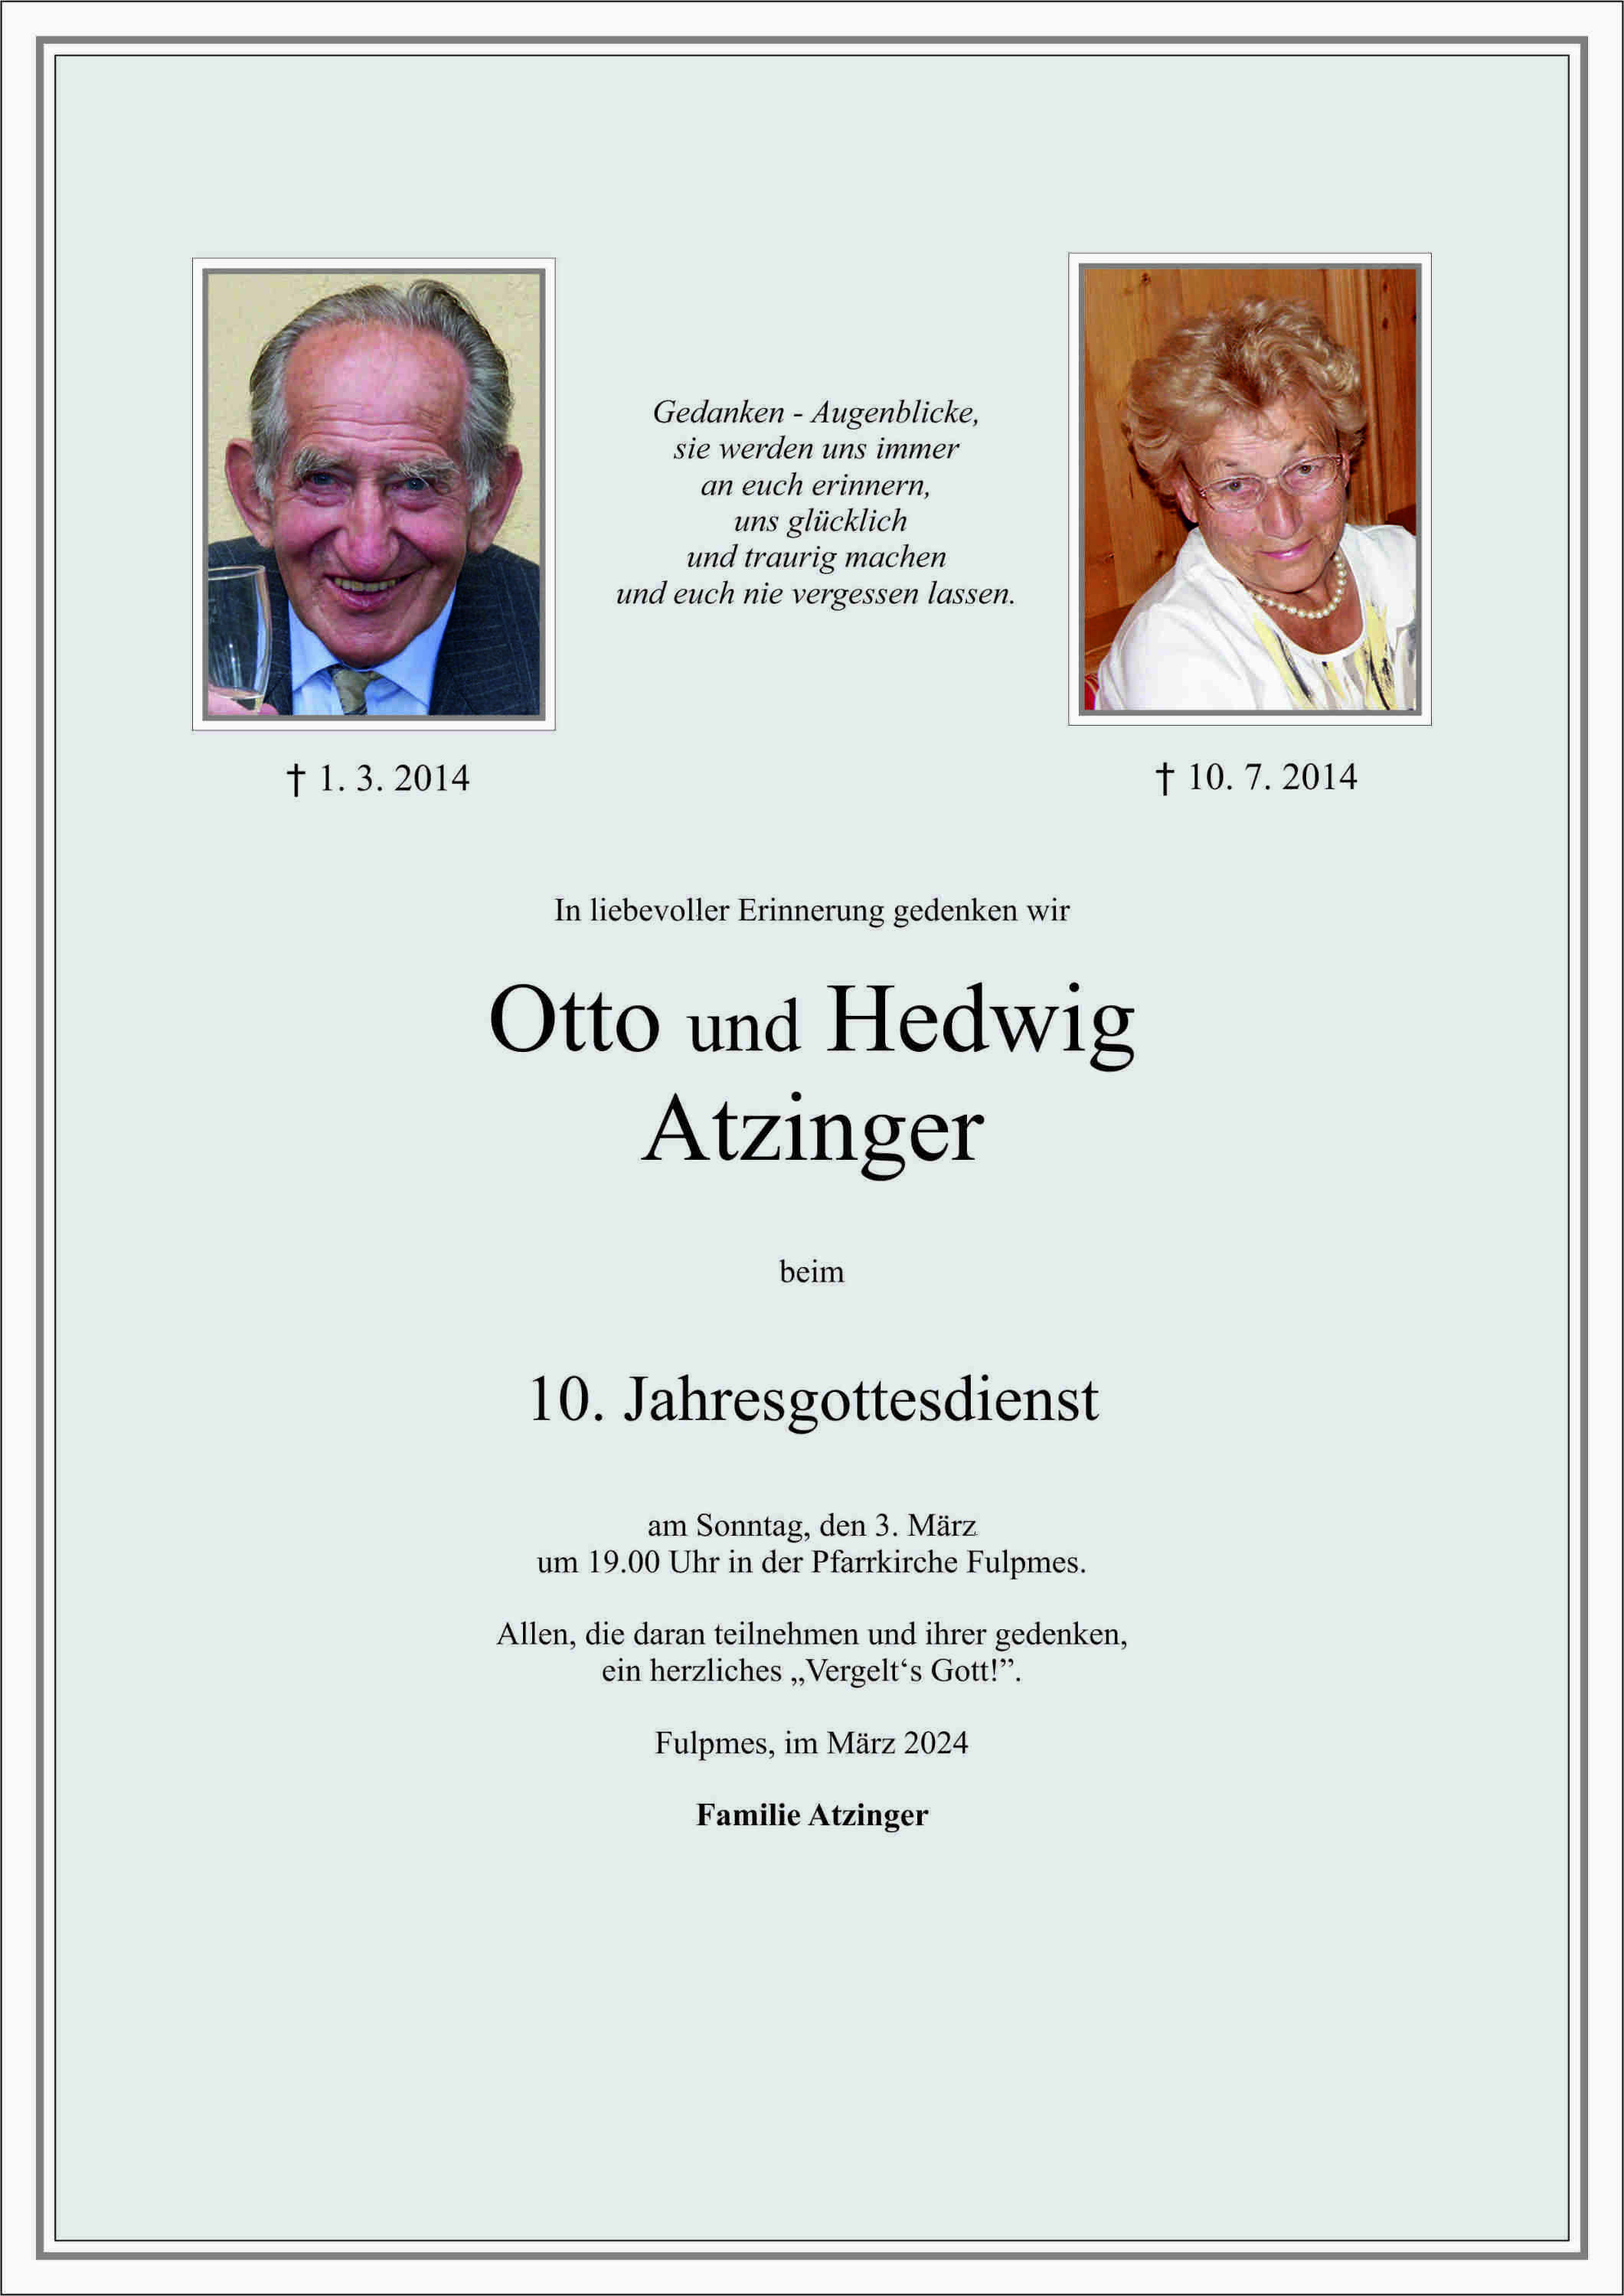 Otto Atzinger